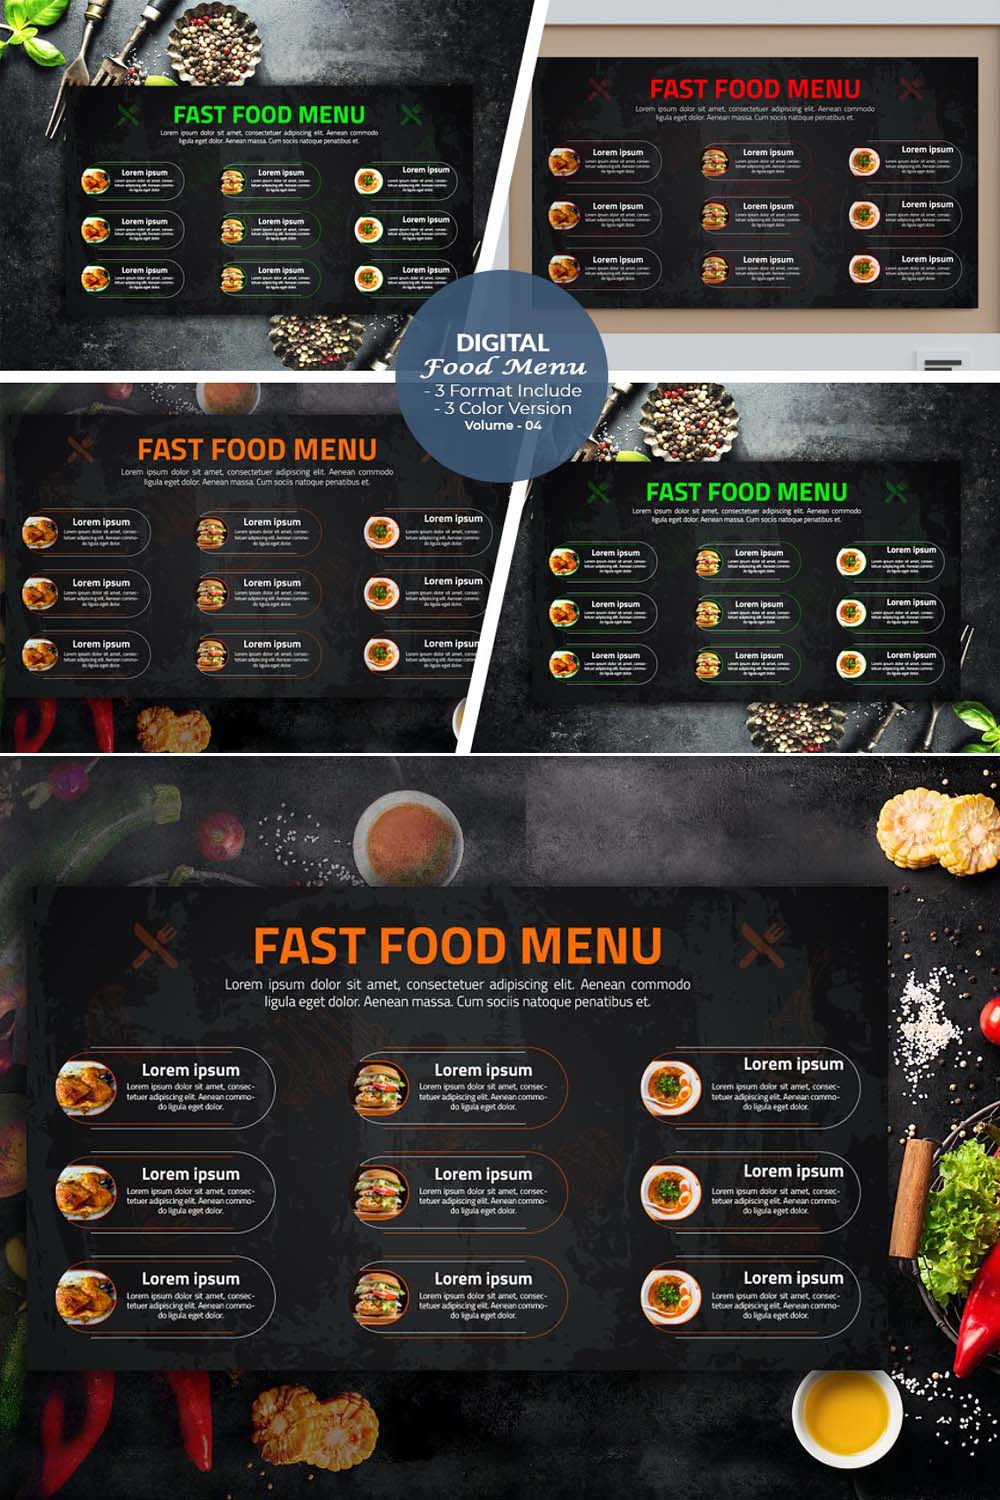 Fast Food Digital Menu Design pinterest preview image.